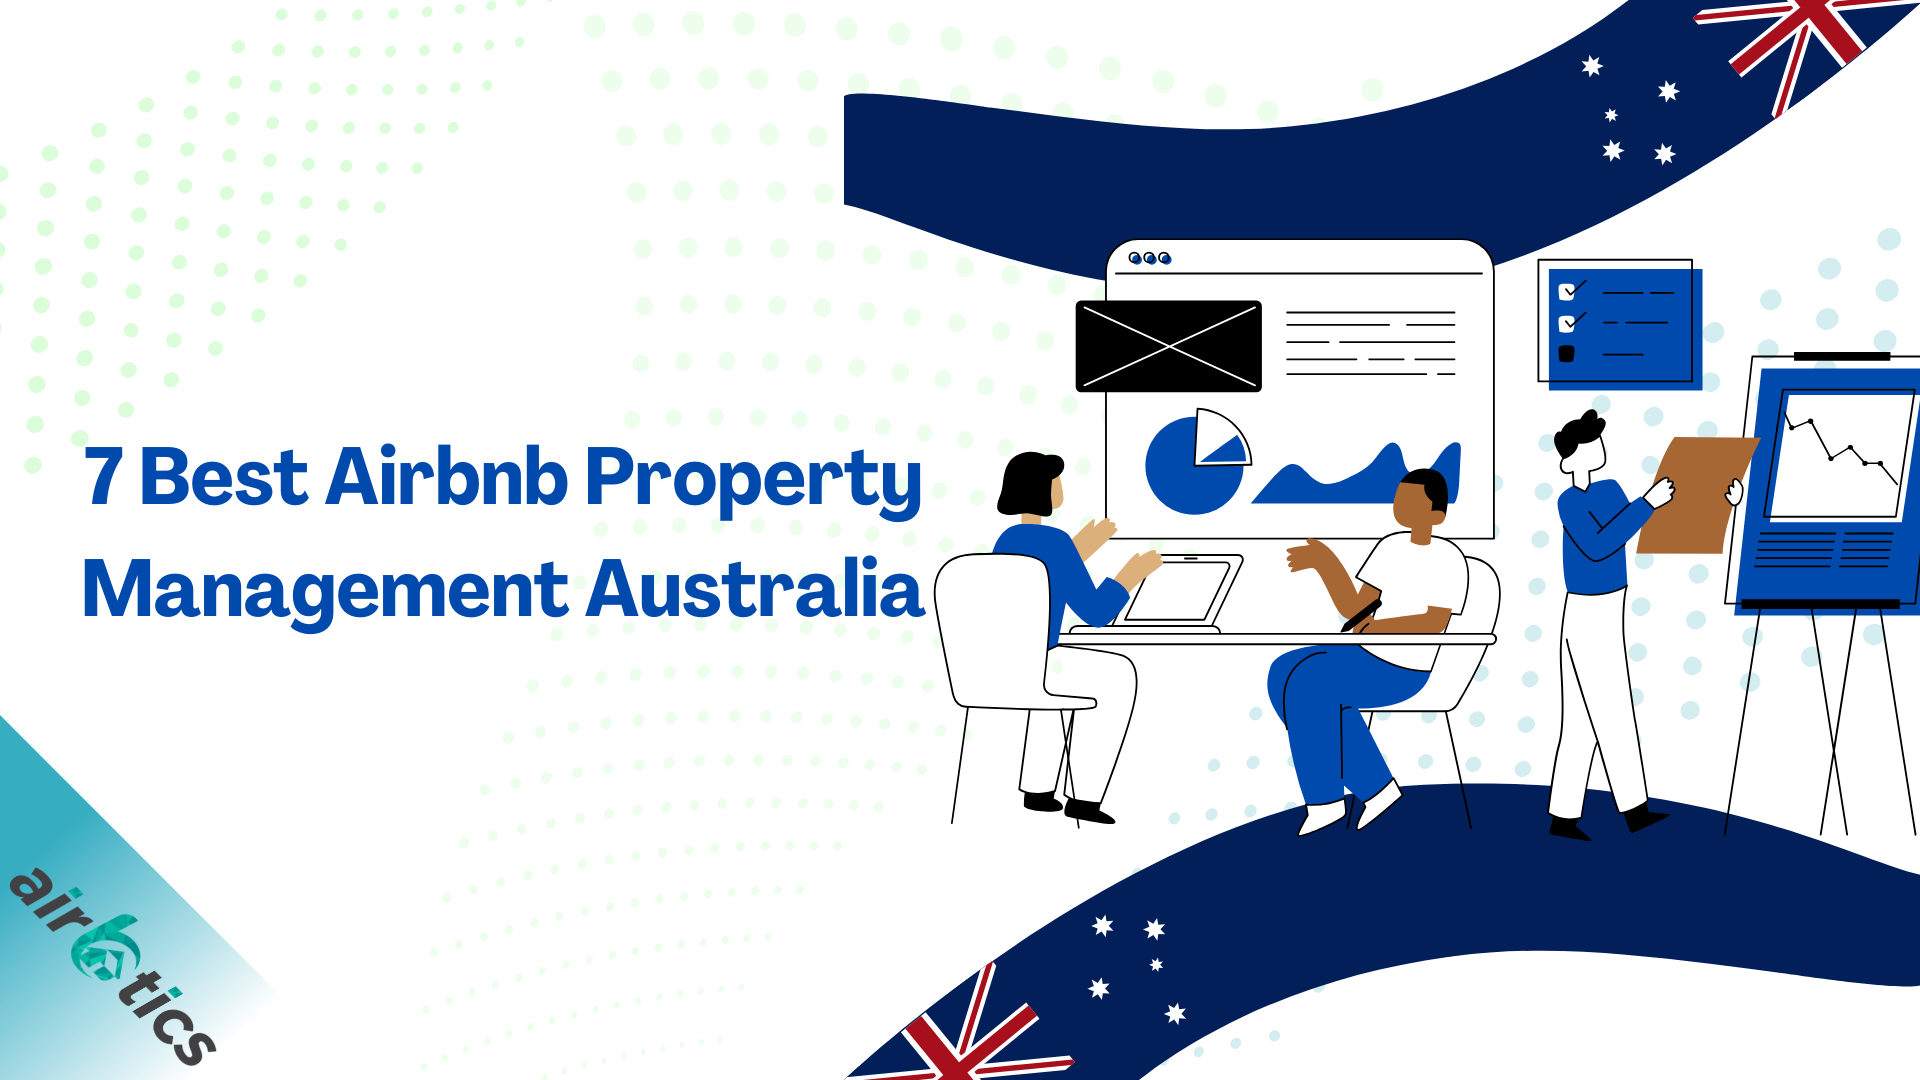 airbnb property management australia